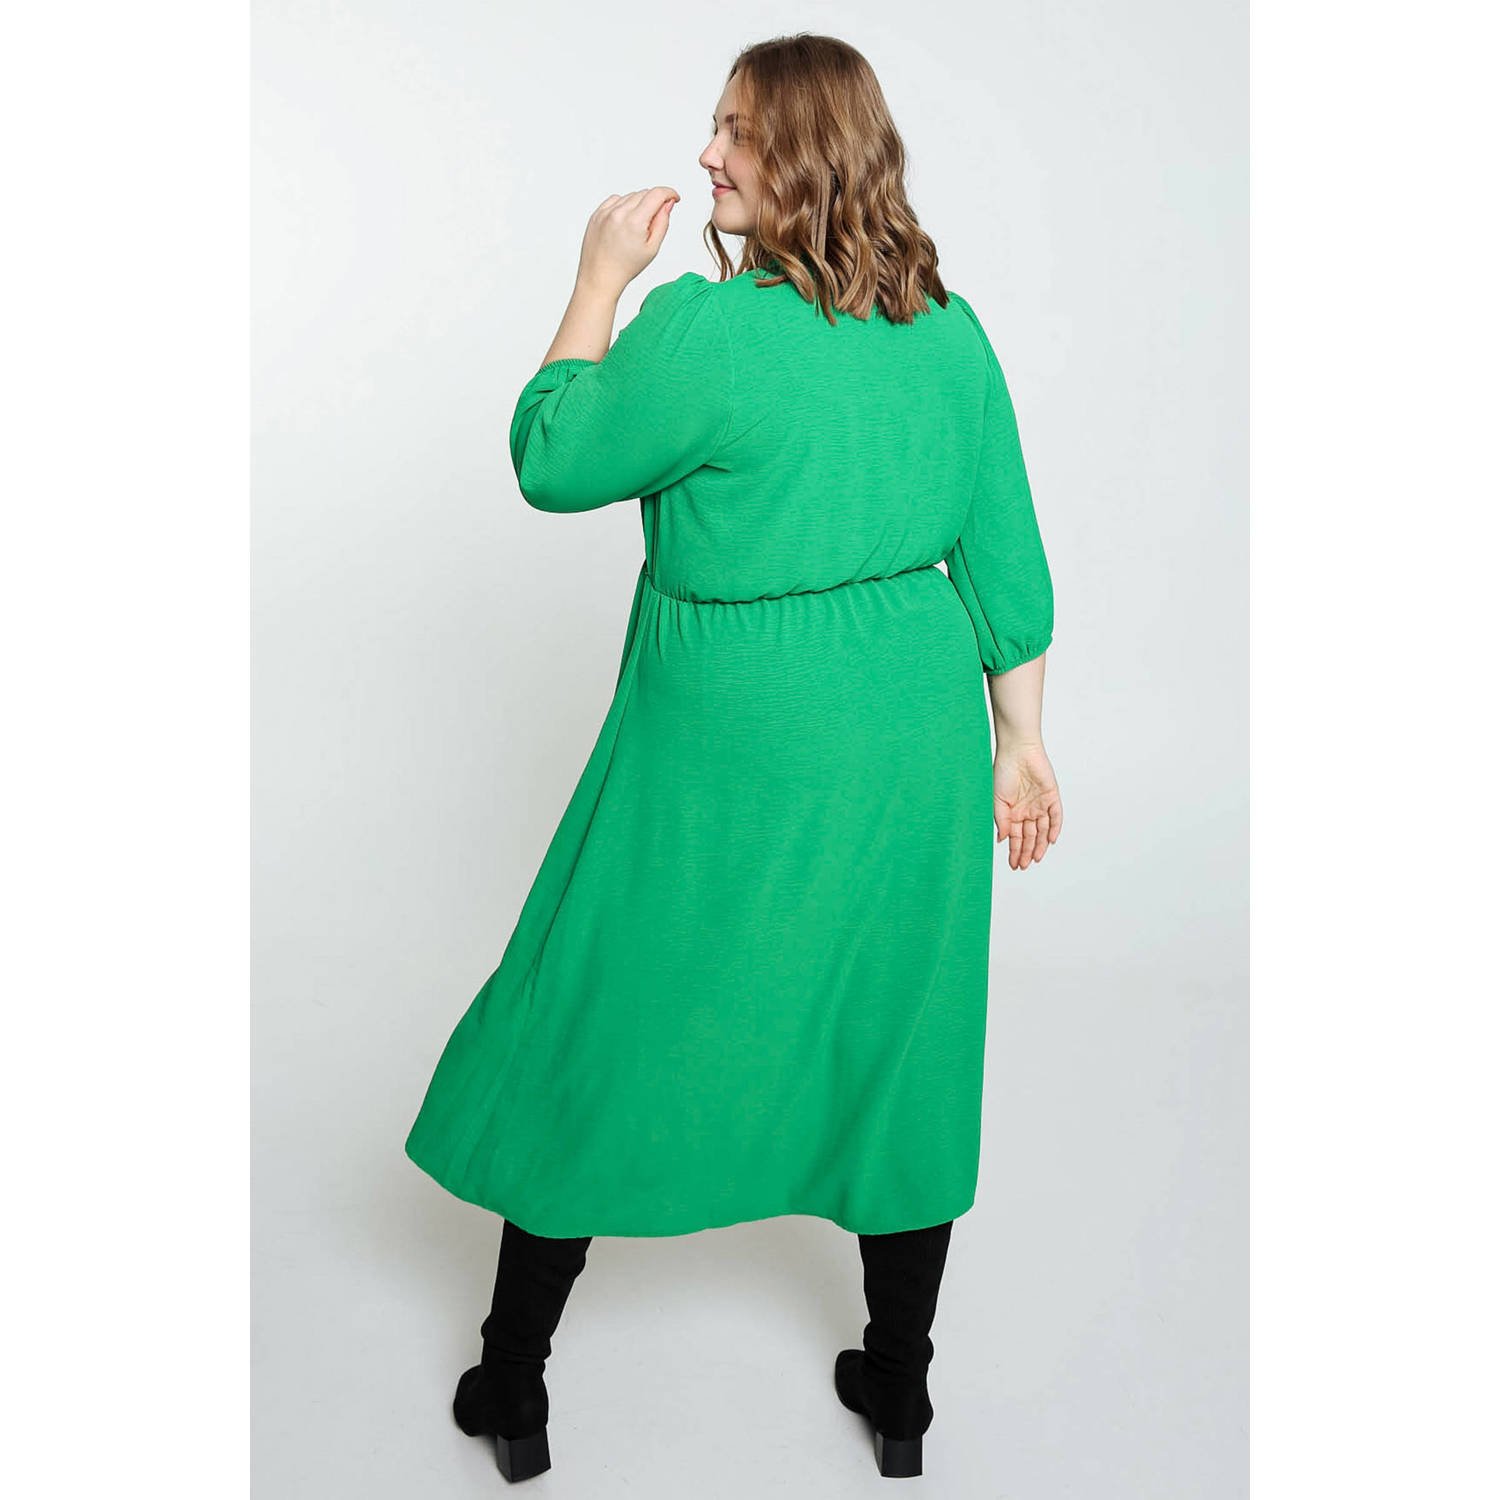 Paprika jurk groen